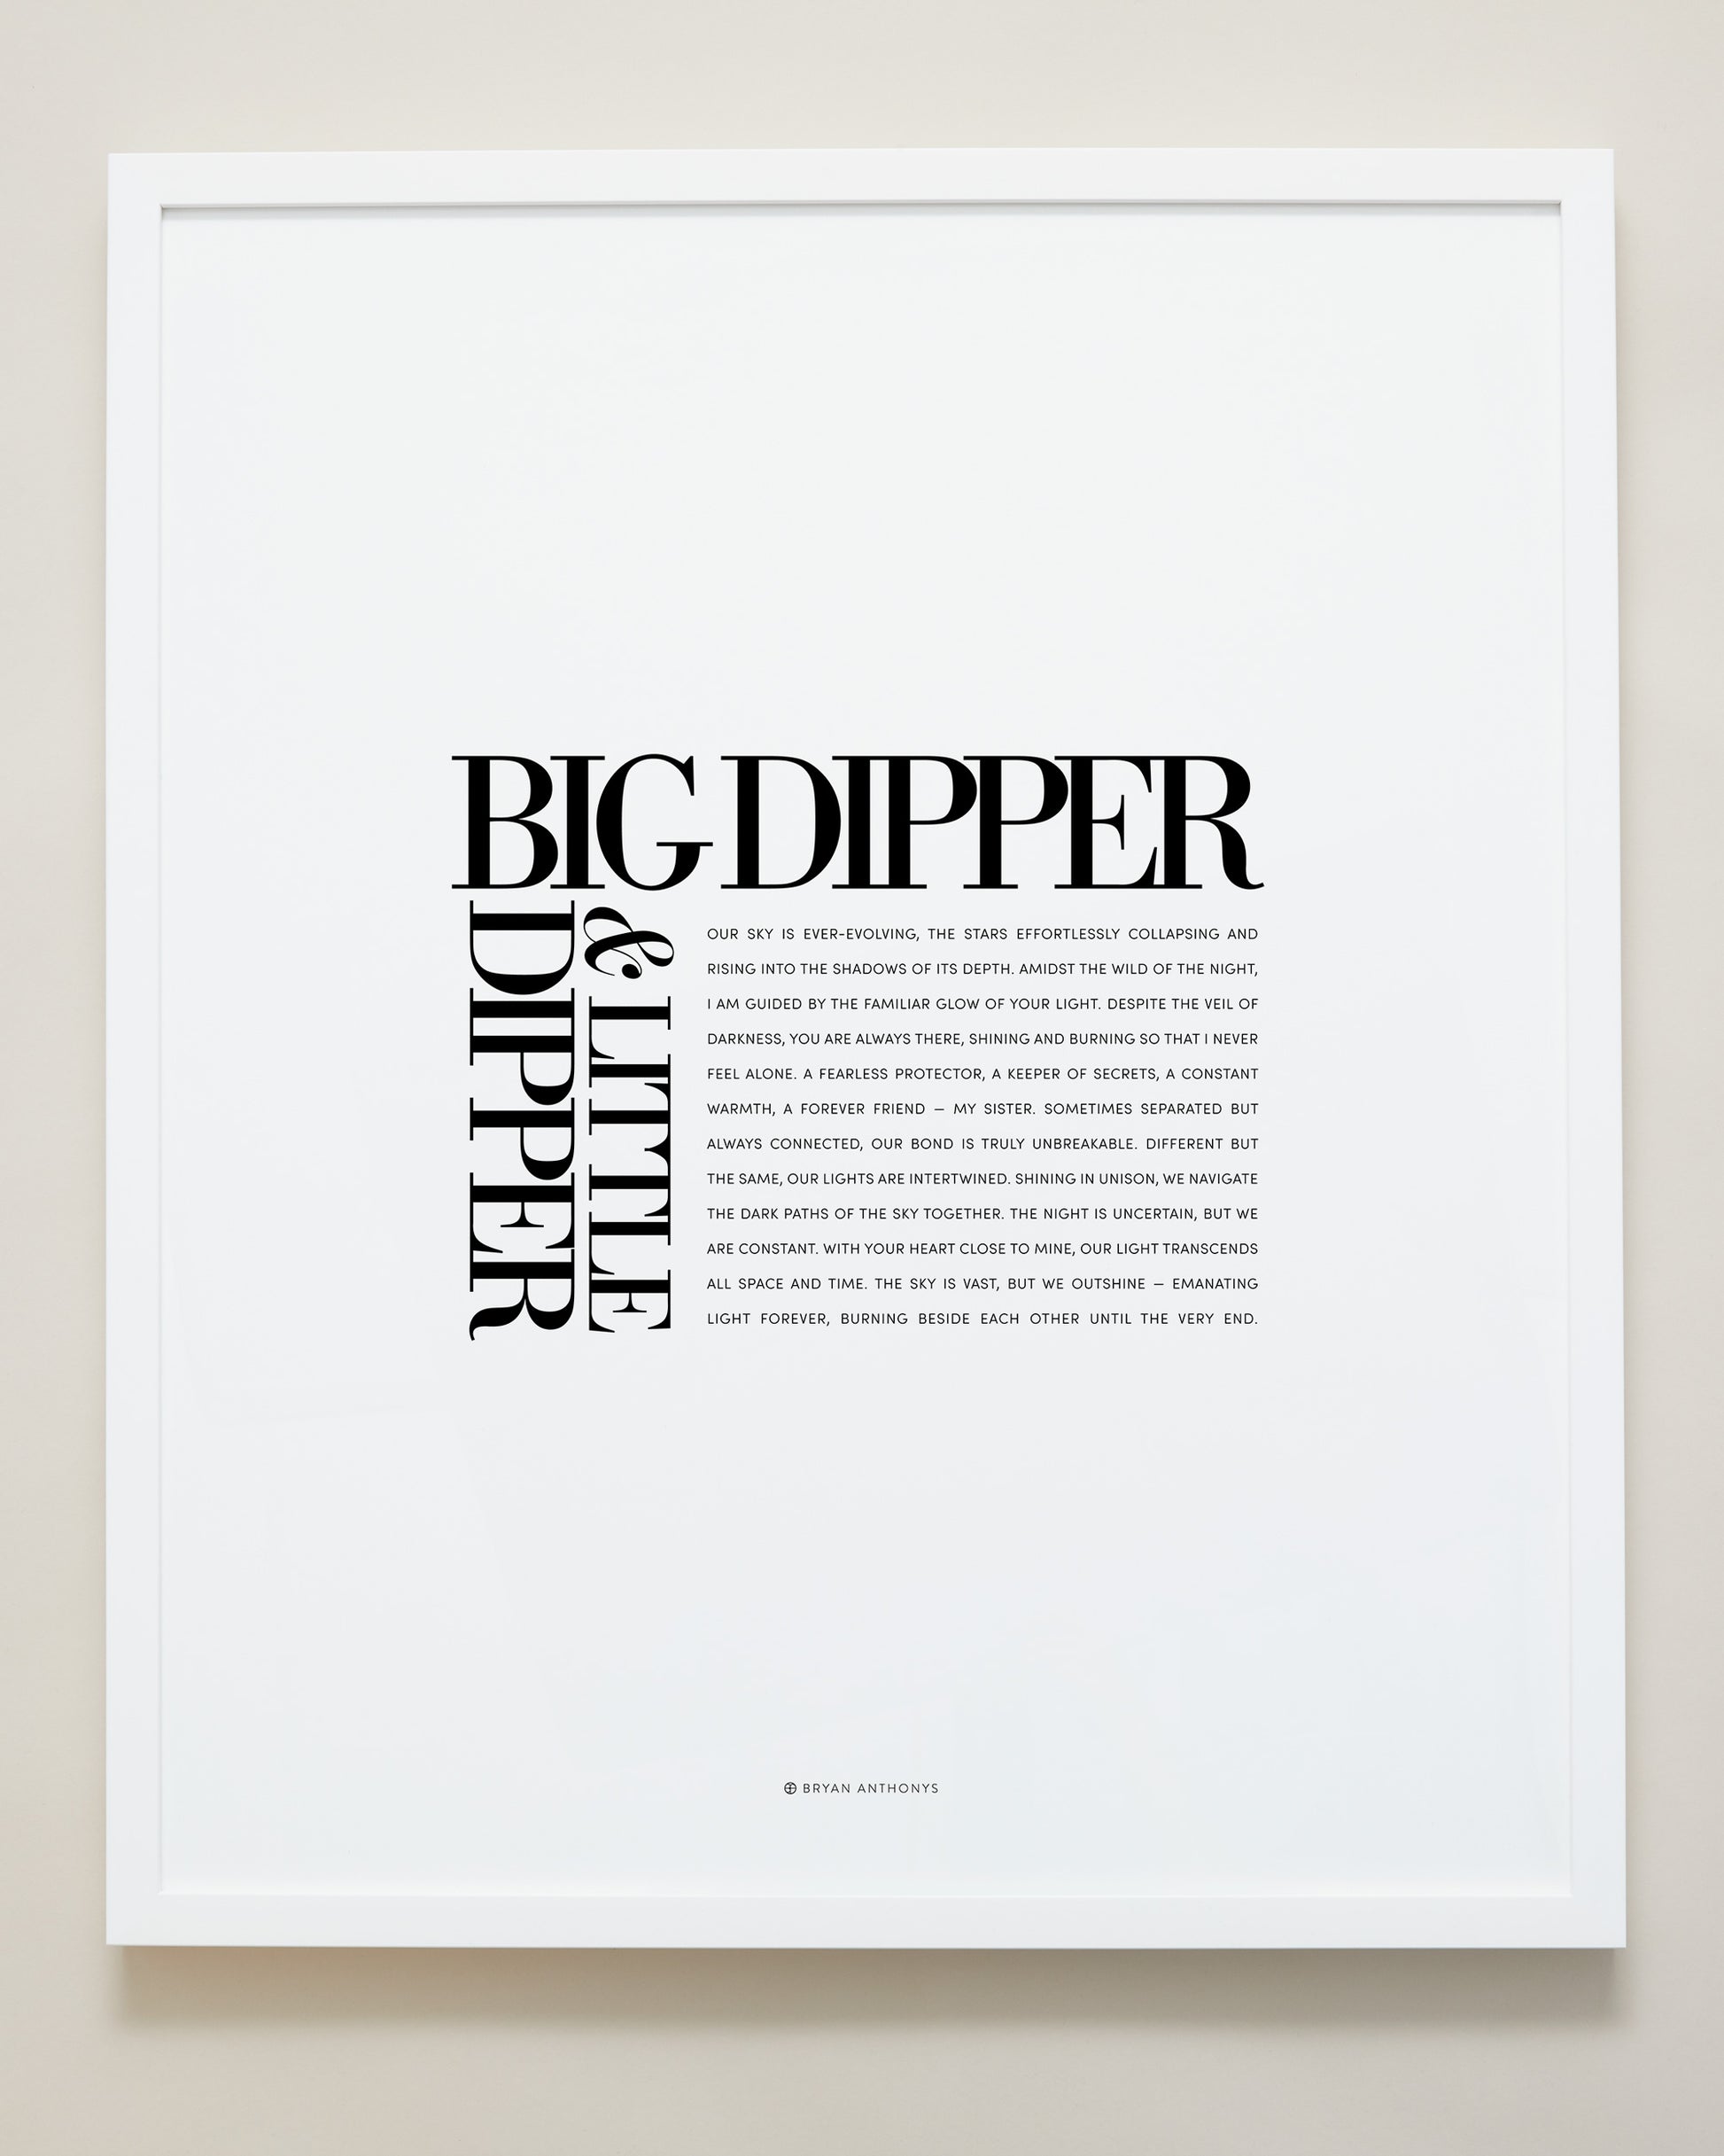 Bryan Anthonys Home Decor Big Dipper & Little Dipper Editorial Framed Print White Frame 20x24